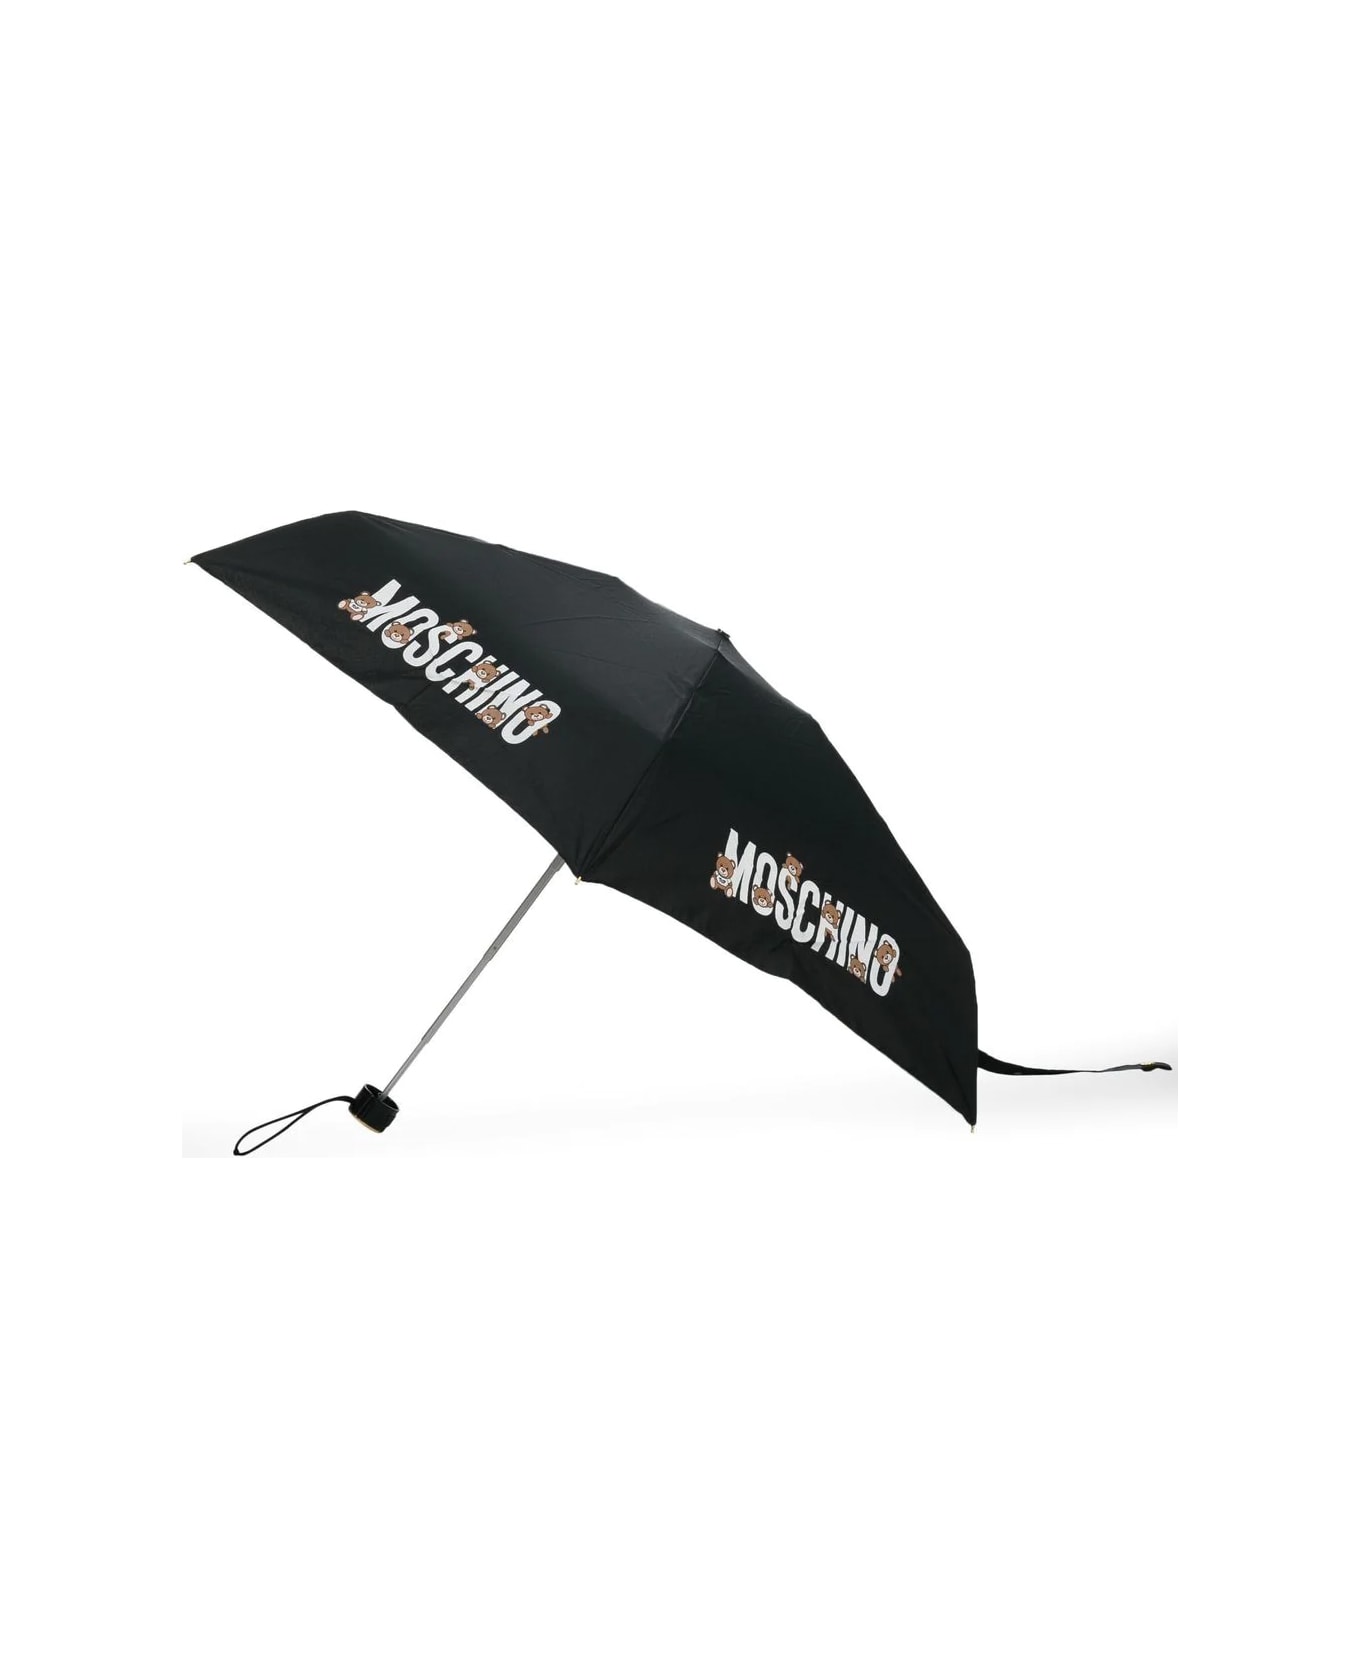 Moschino Bear Logo Box Supermini Umbrella - A Black 傘